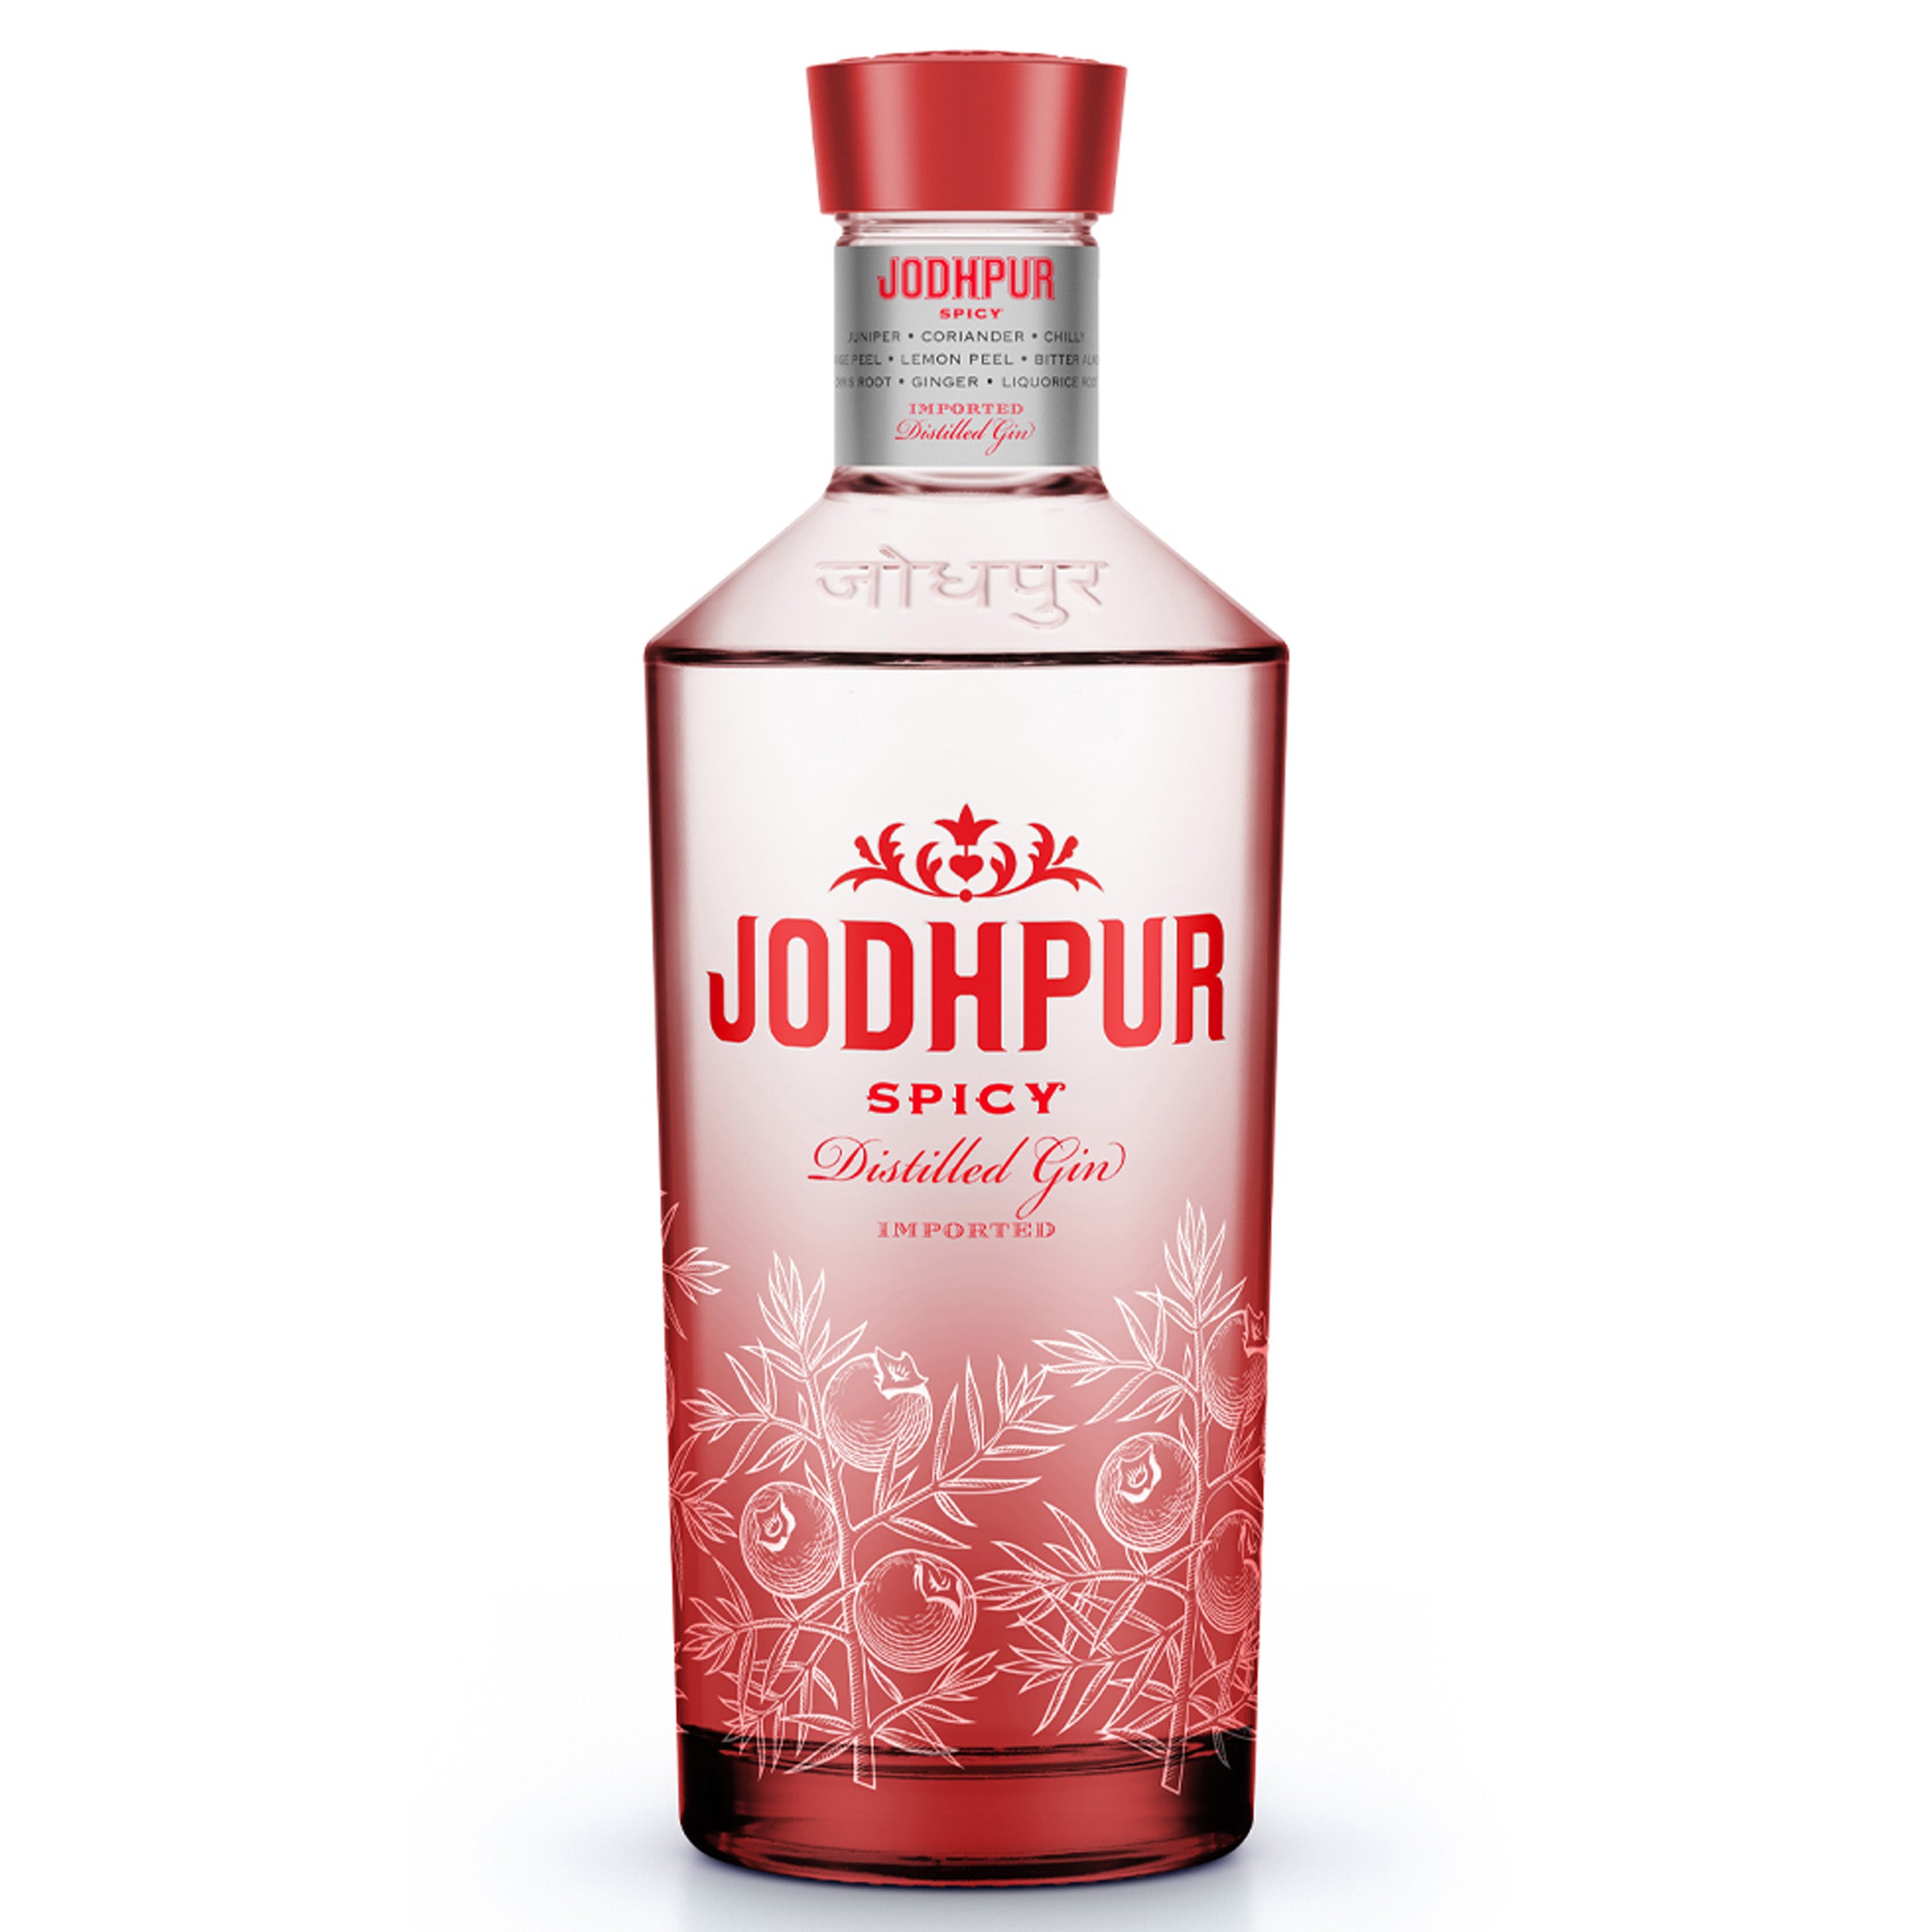 Jodphur Spicy Gin